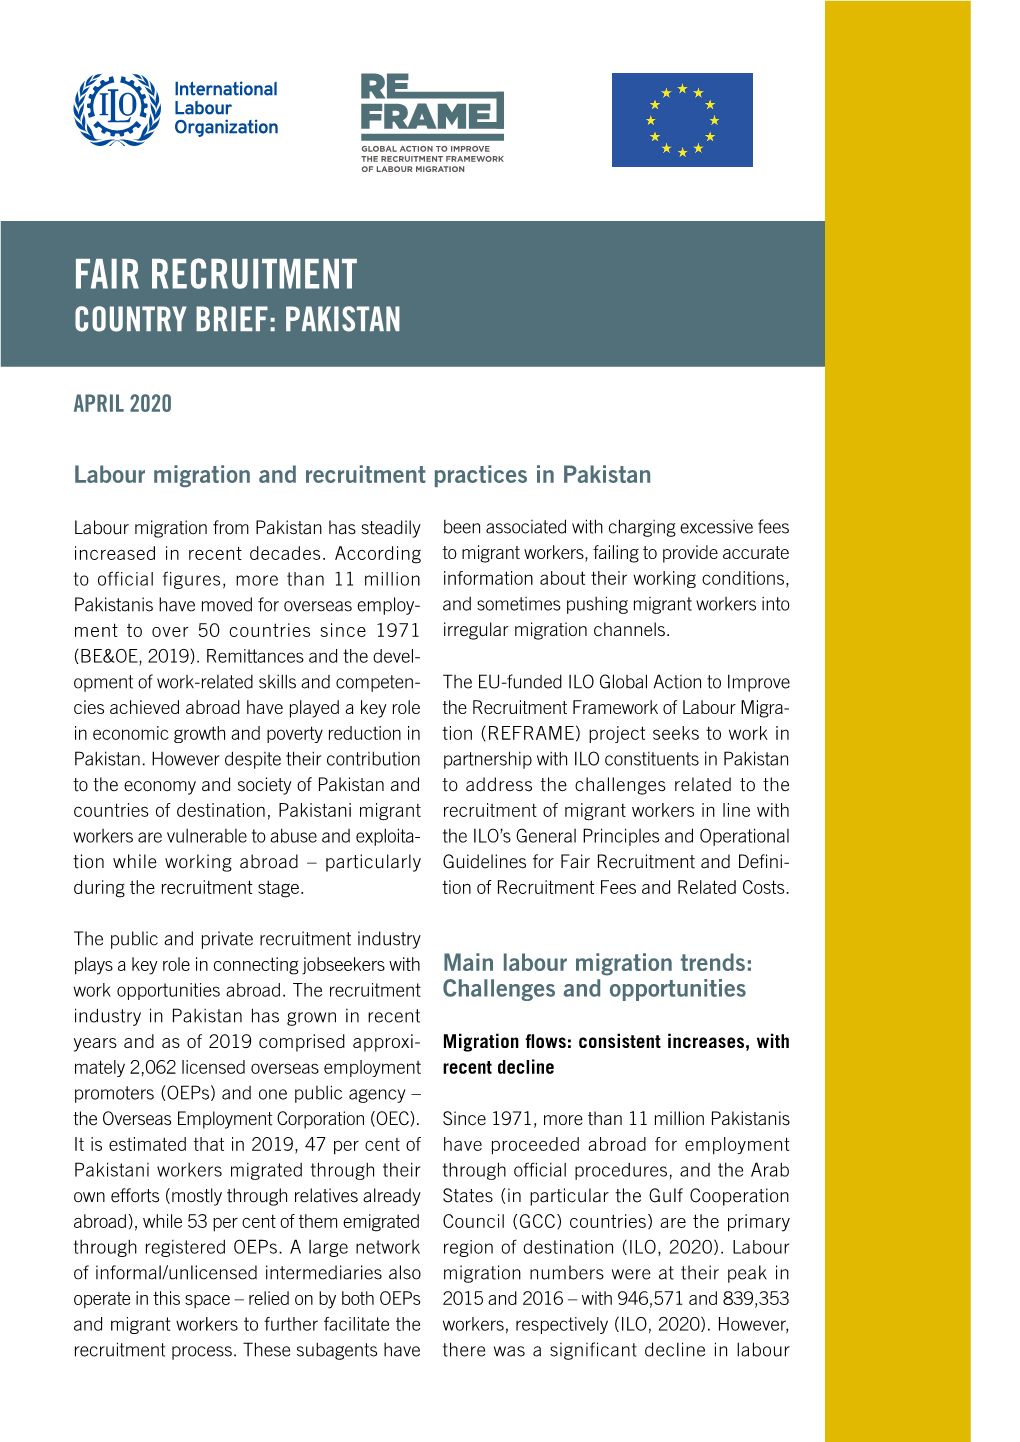 Fair Recruitment Country Brief: Pakistan